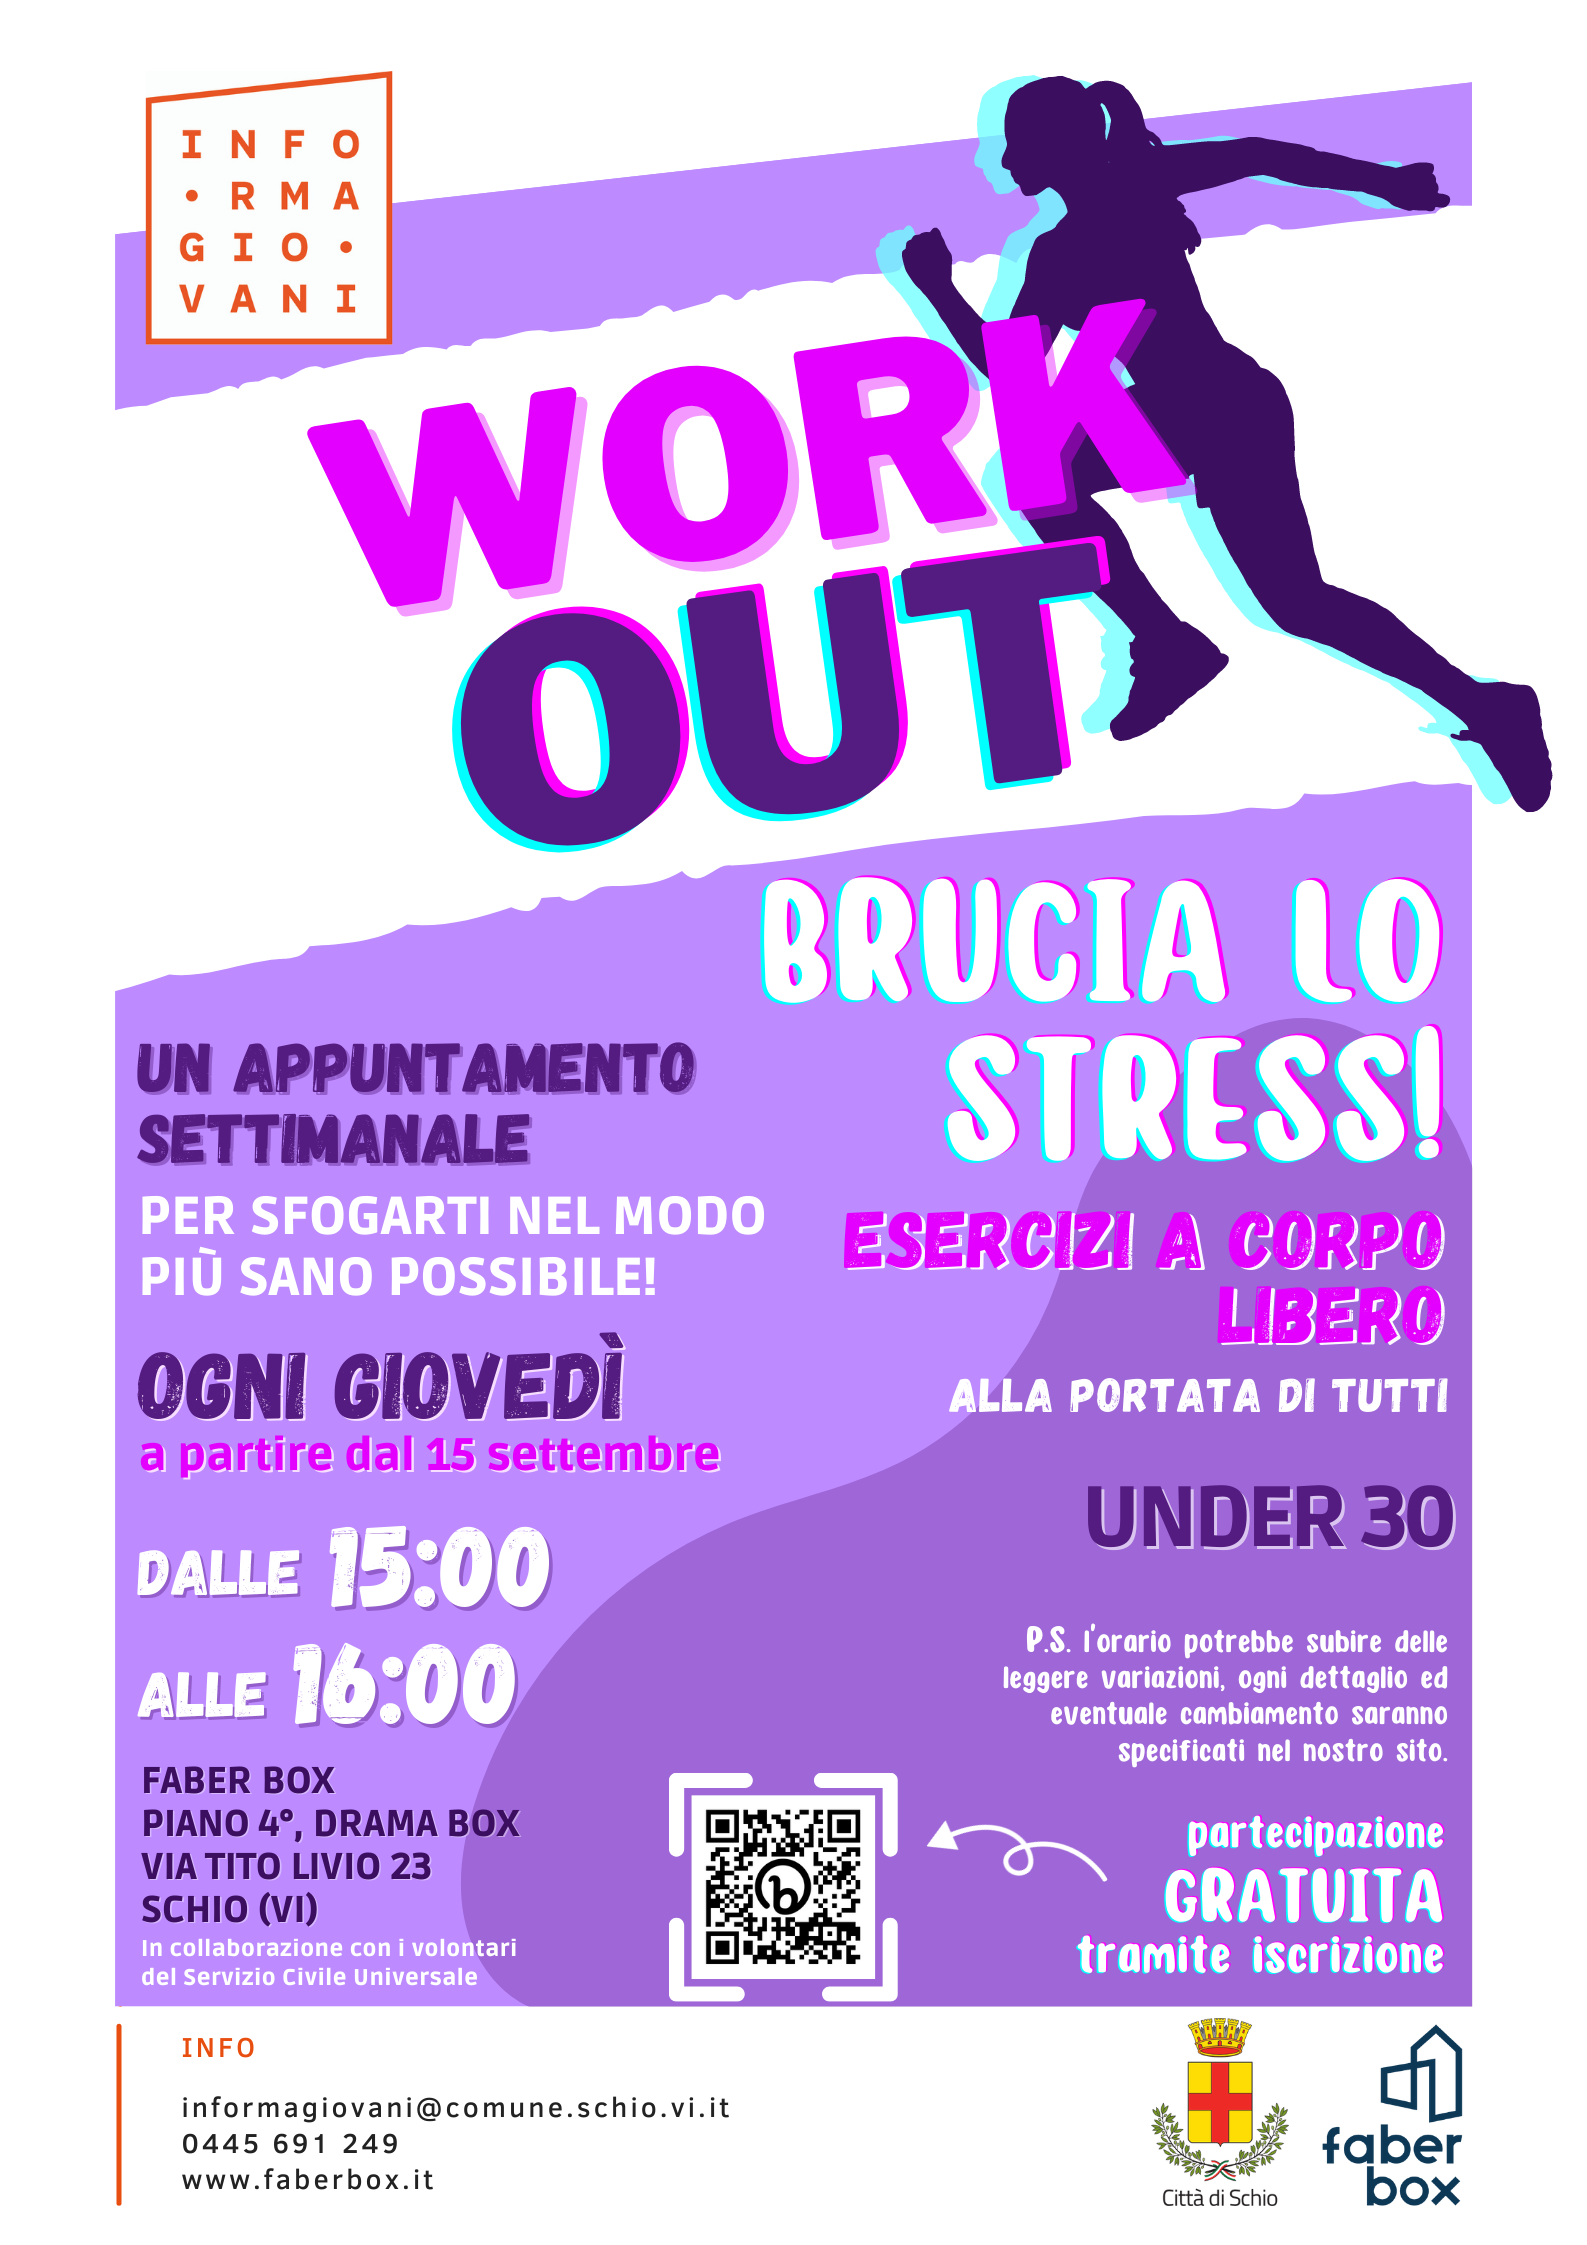 WORKOUT: BRUCIA LO STRESS!